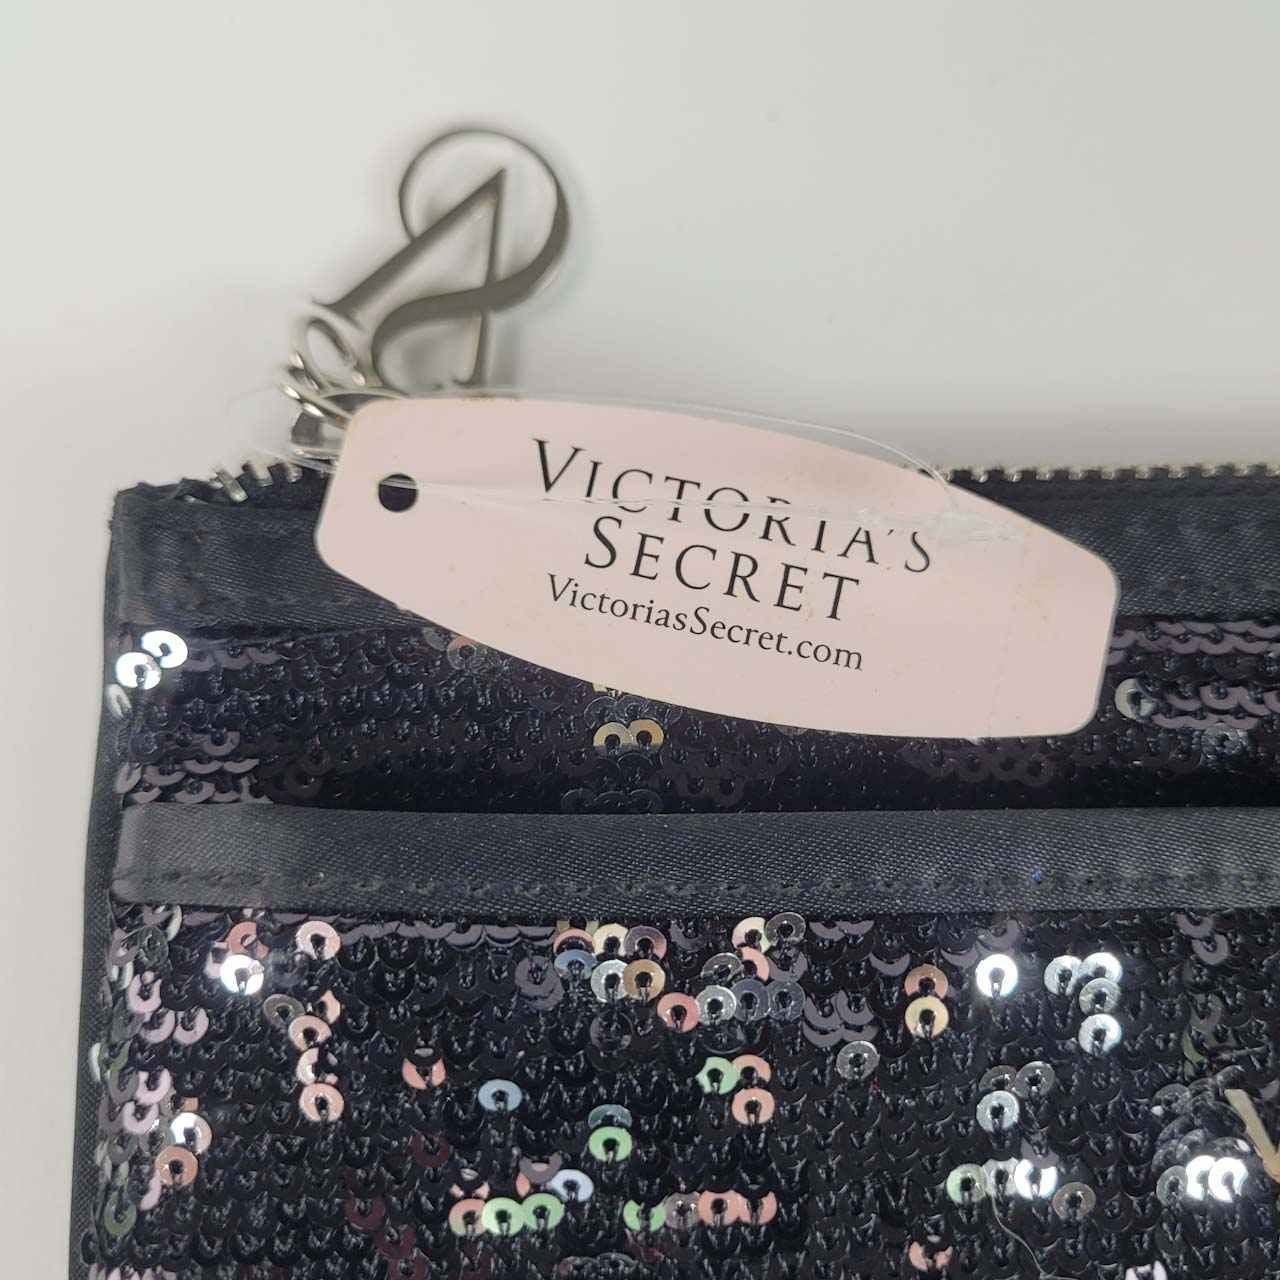 Victoria's Secret - Sequined Clutch Purse - Black & Silver - NEW